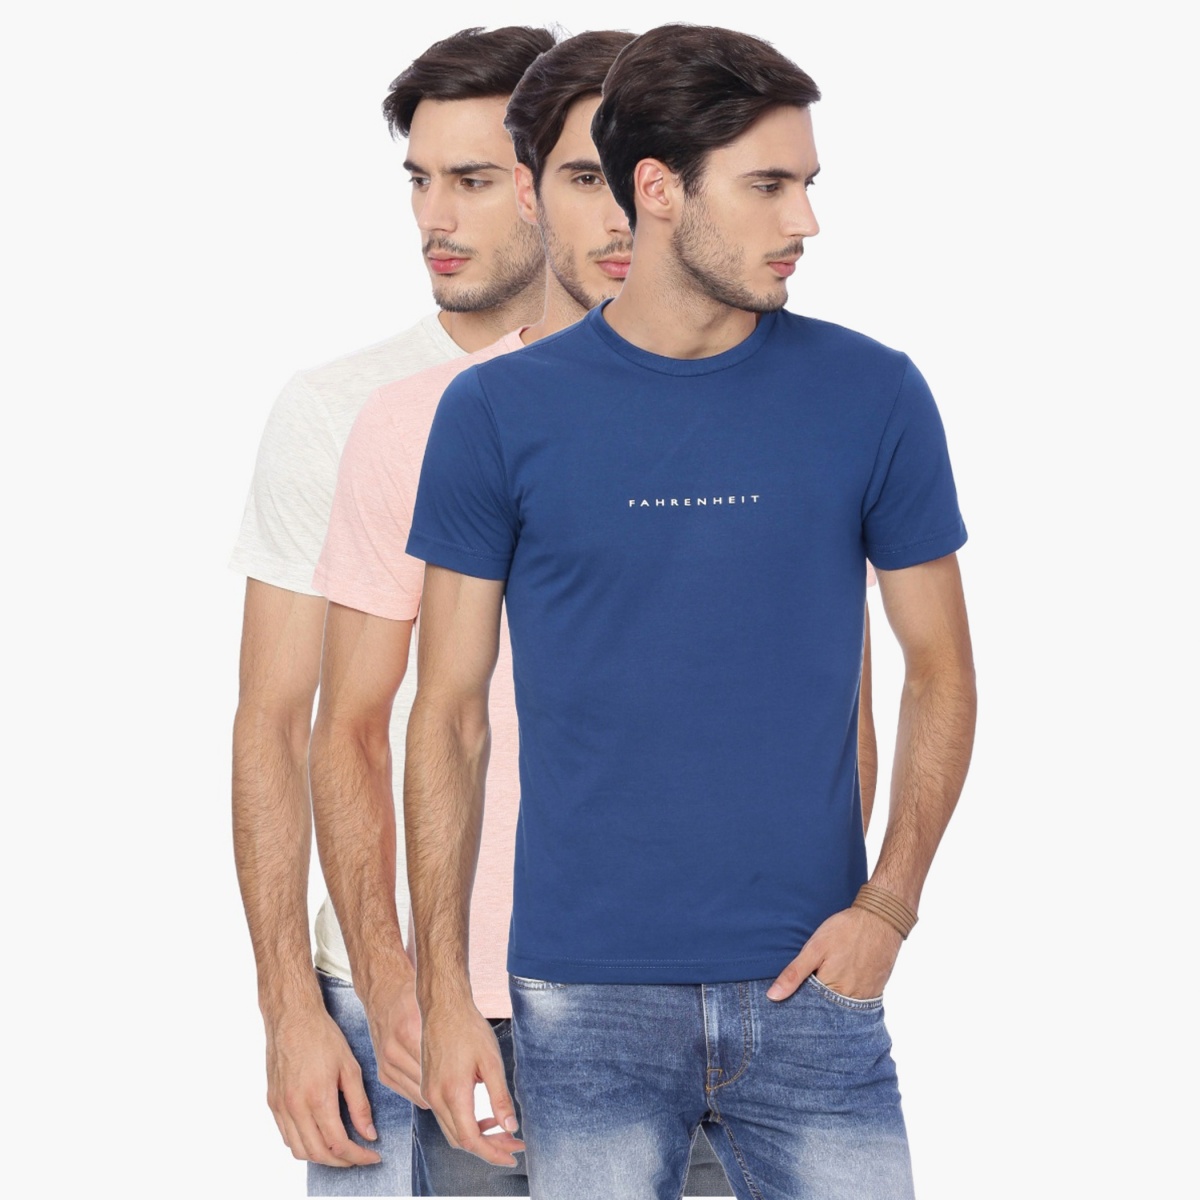 fahrenheit t shirts online india